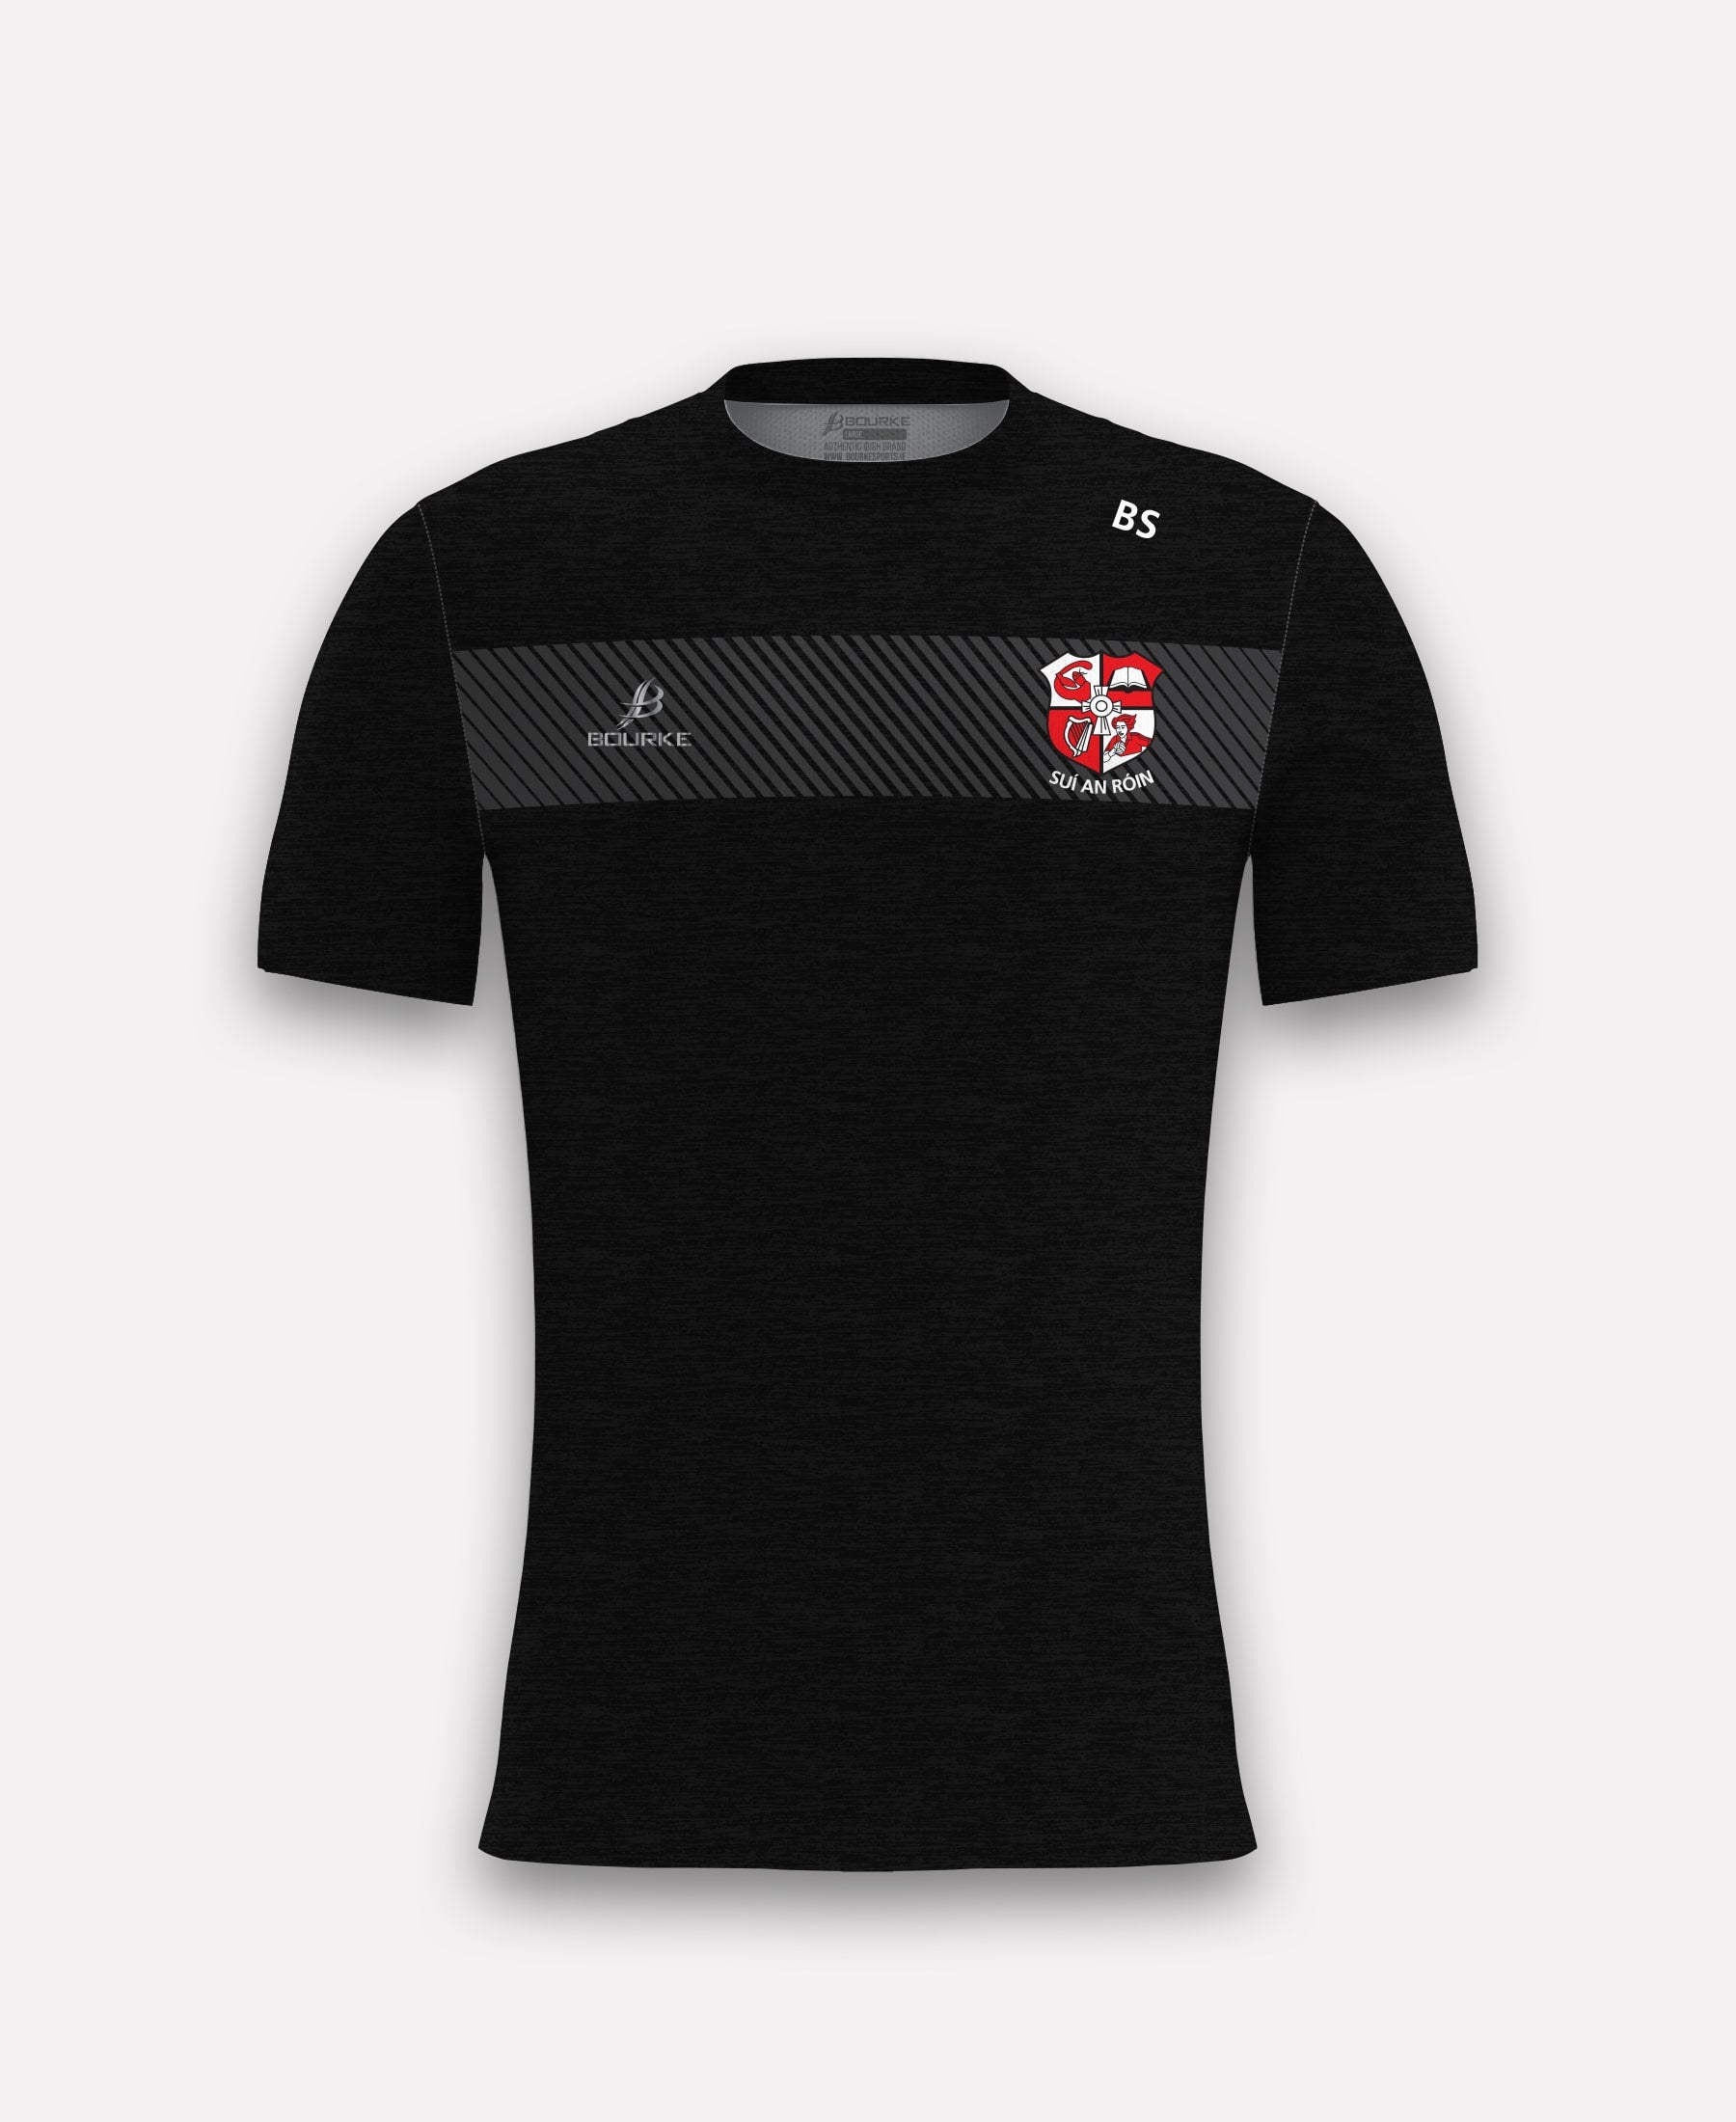 Shinrone GAA TACA T-Shirt (Black)